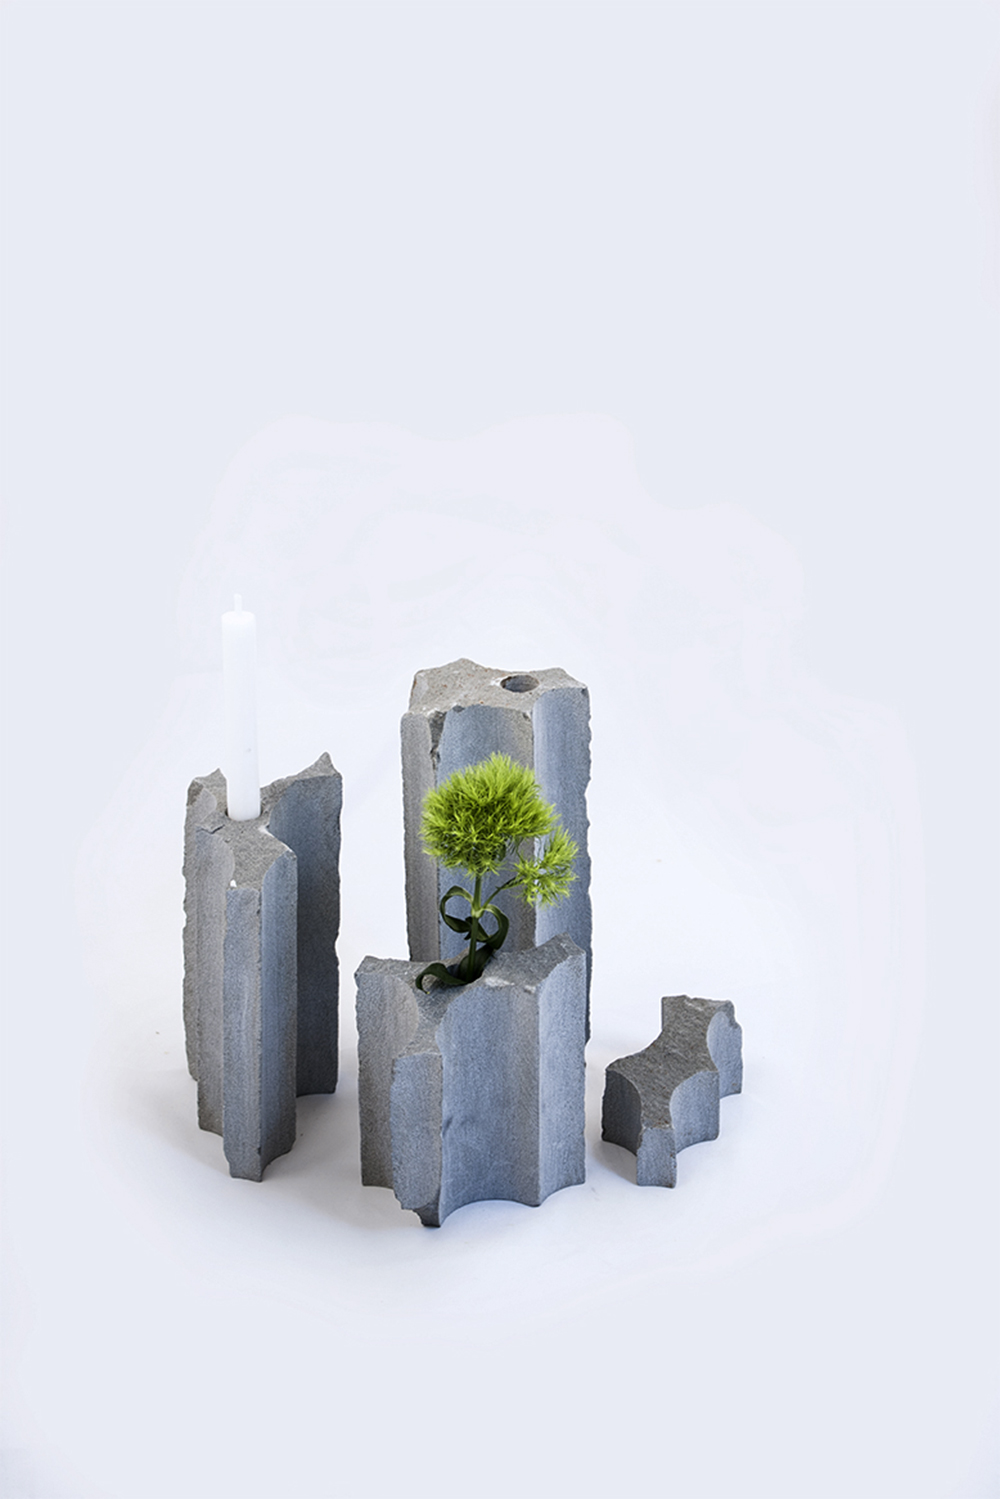 Ghigos Ideas, Recycled stones, 2014